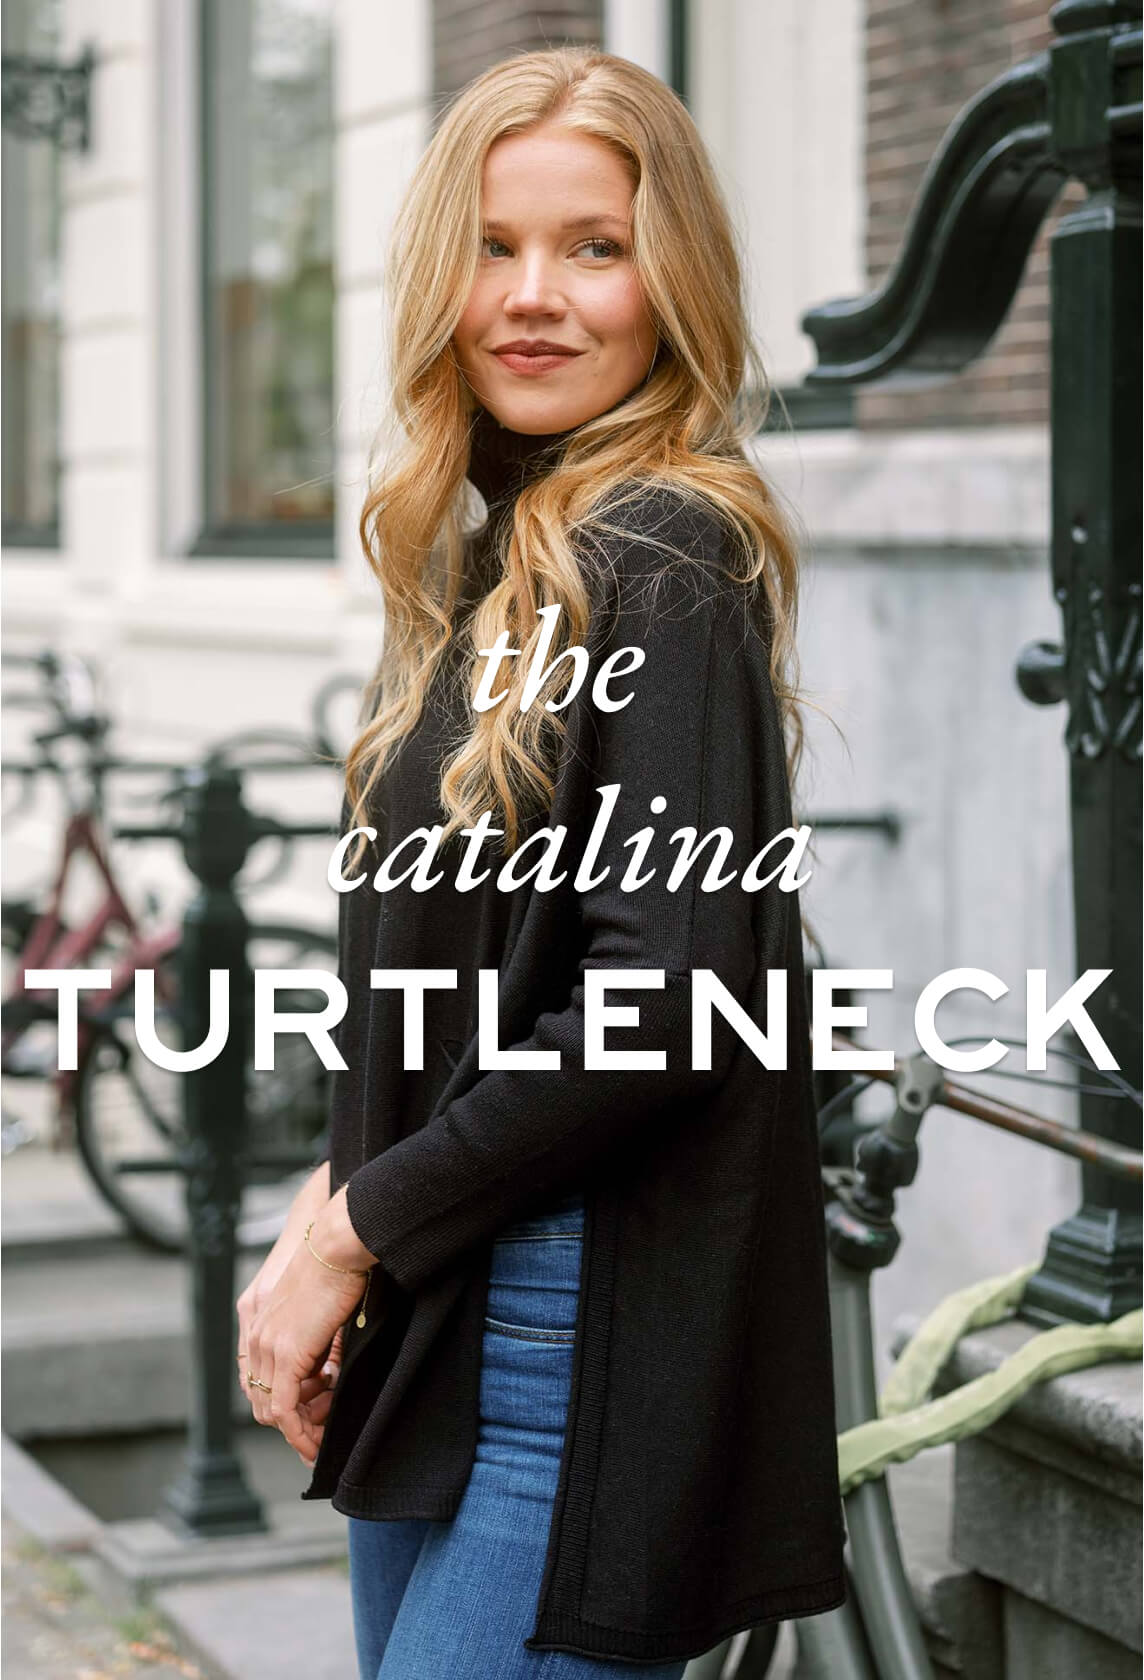 the catalina turtleneck - women wearing black turtleneck sweater with split sides on a street sidewalk